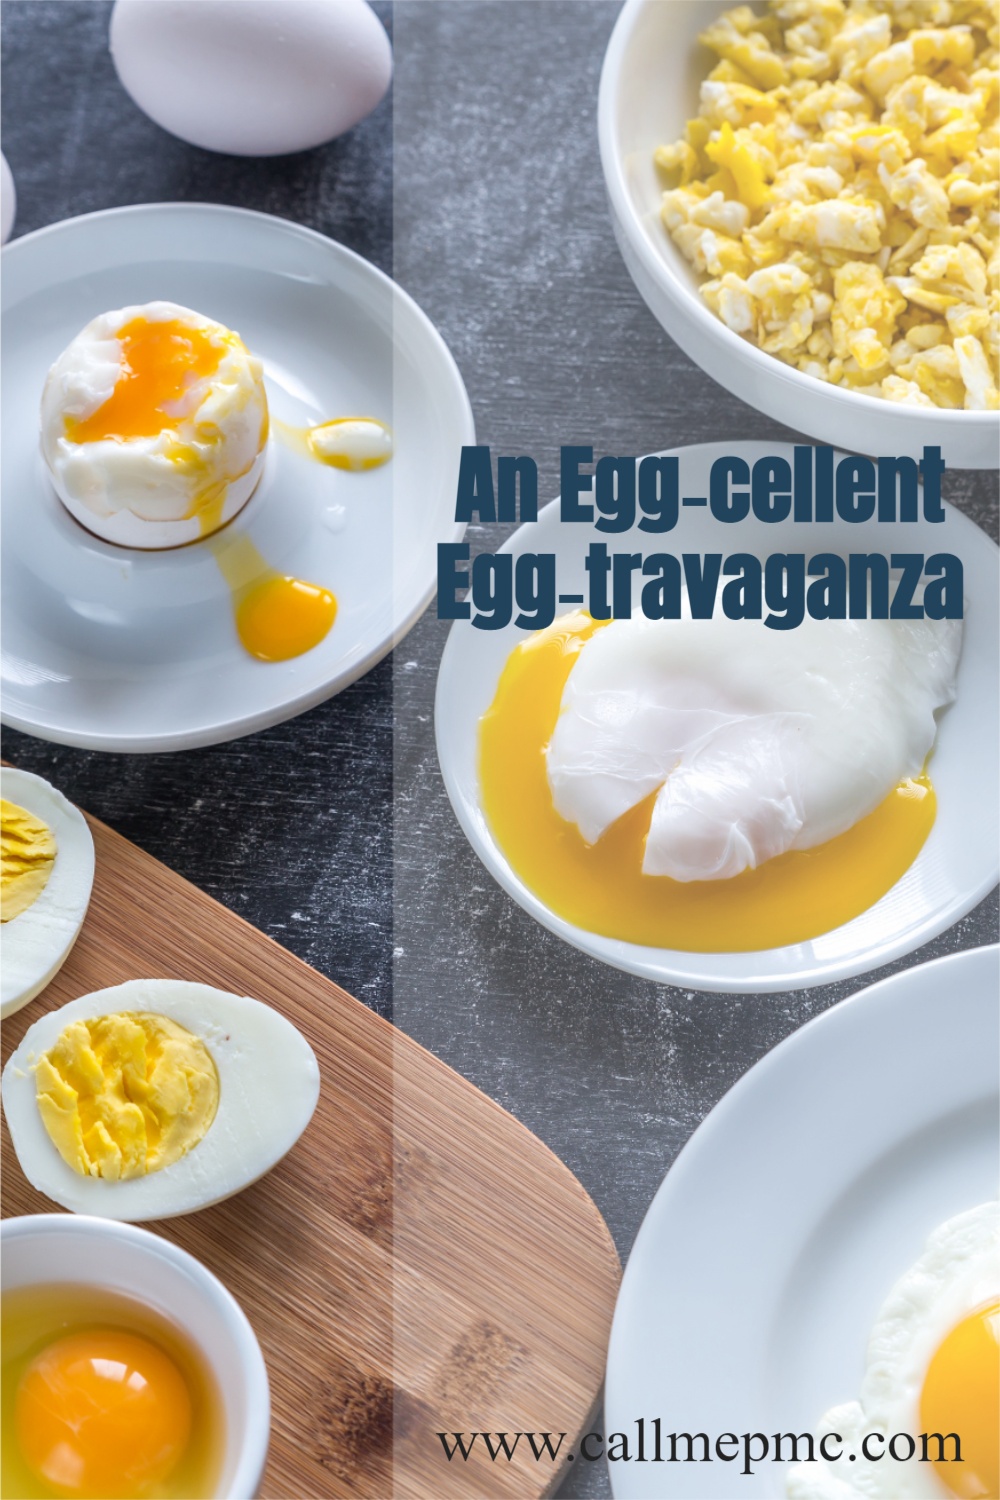 An-Egg-cellent-Egg-travaganza